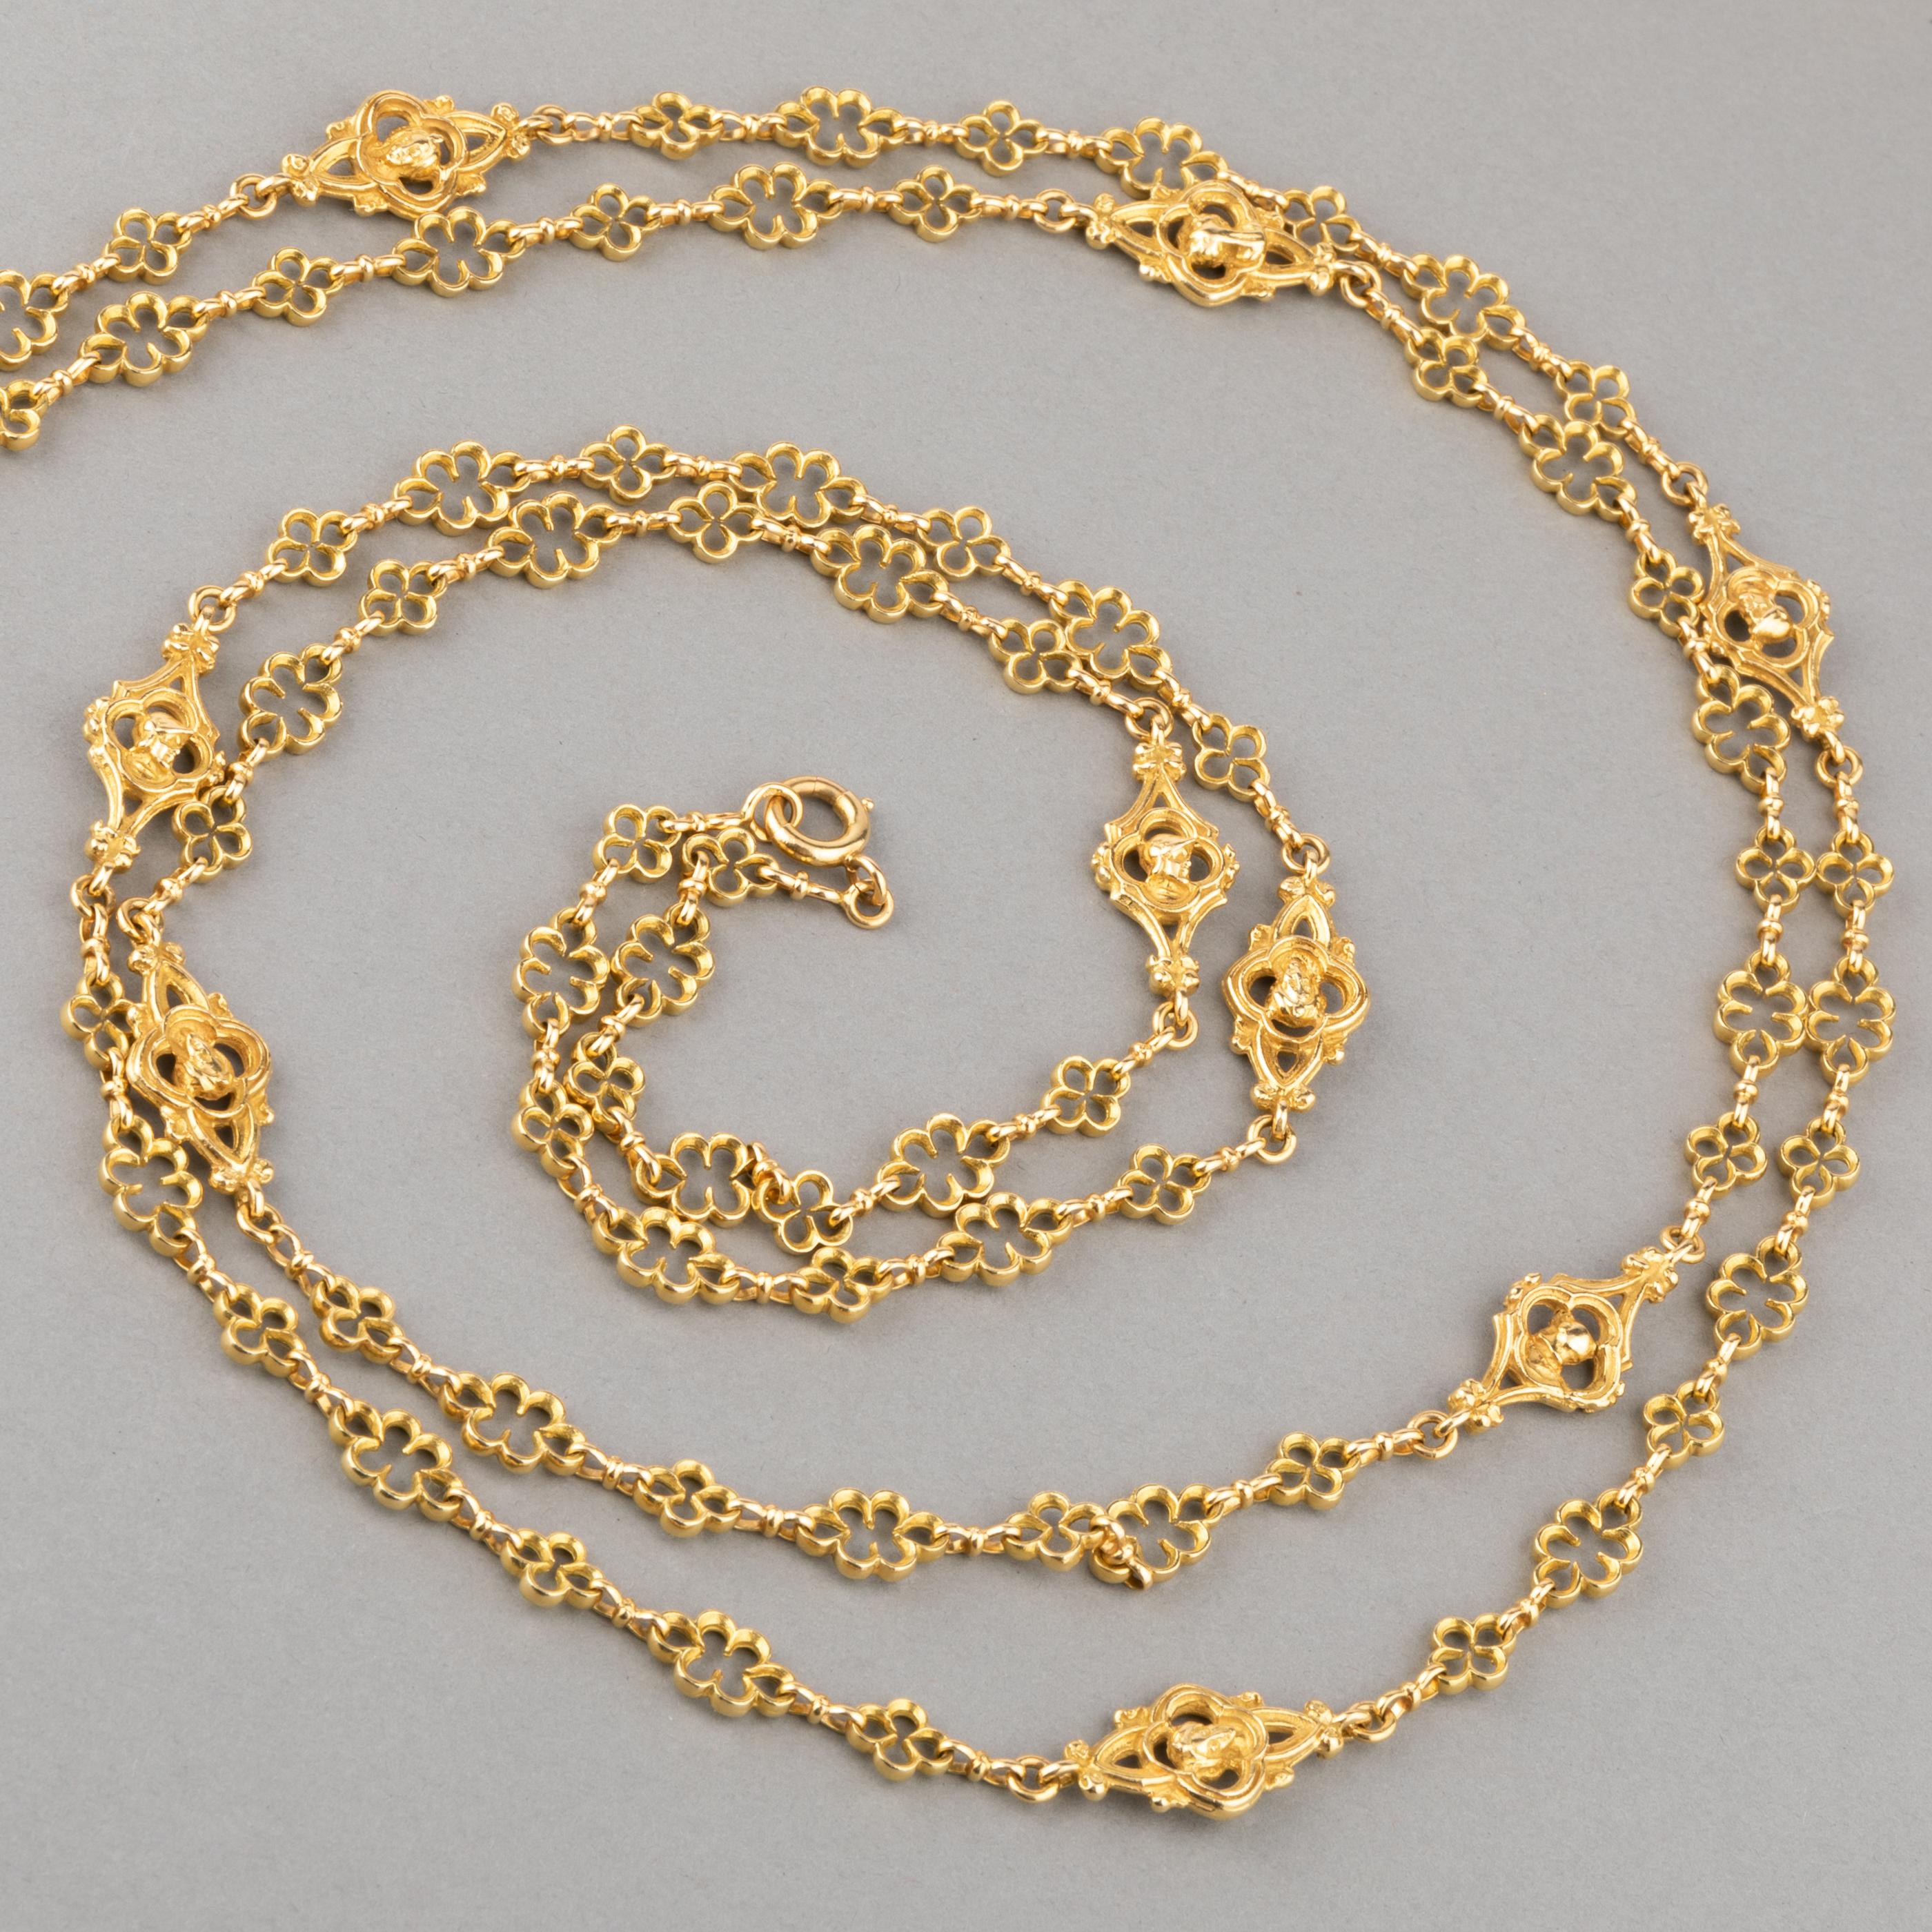 8grm gold chain